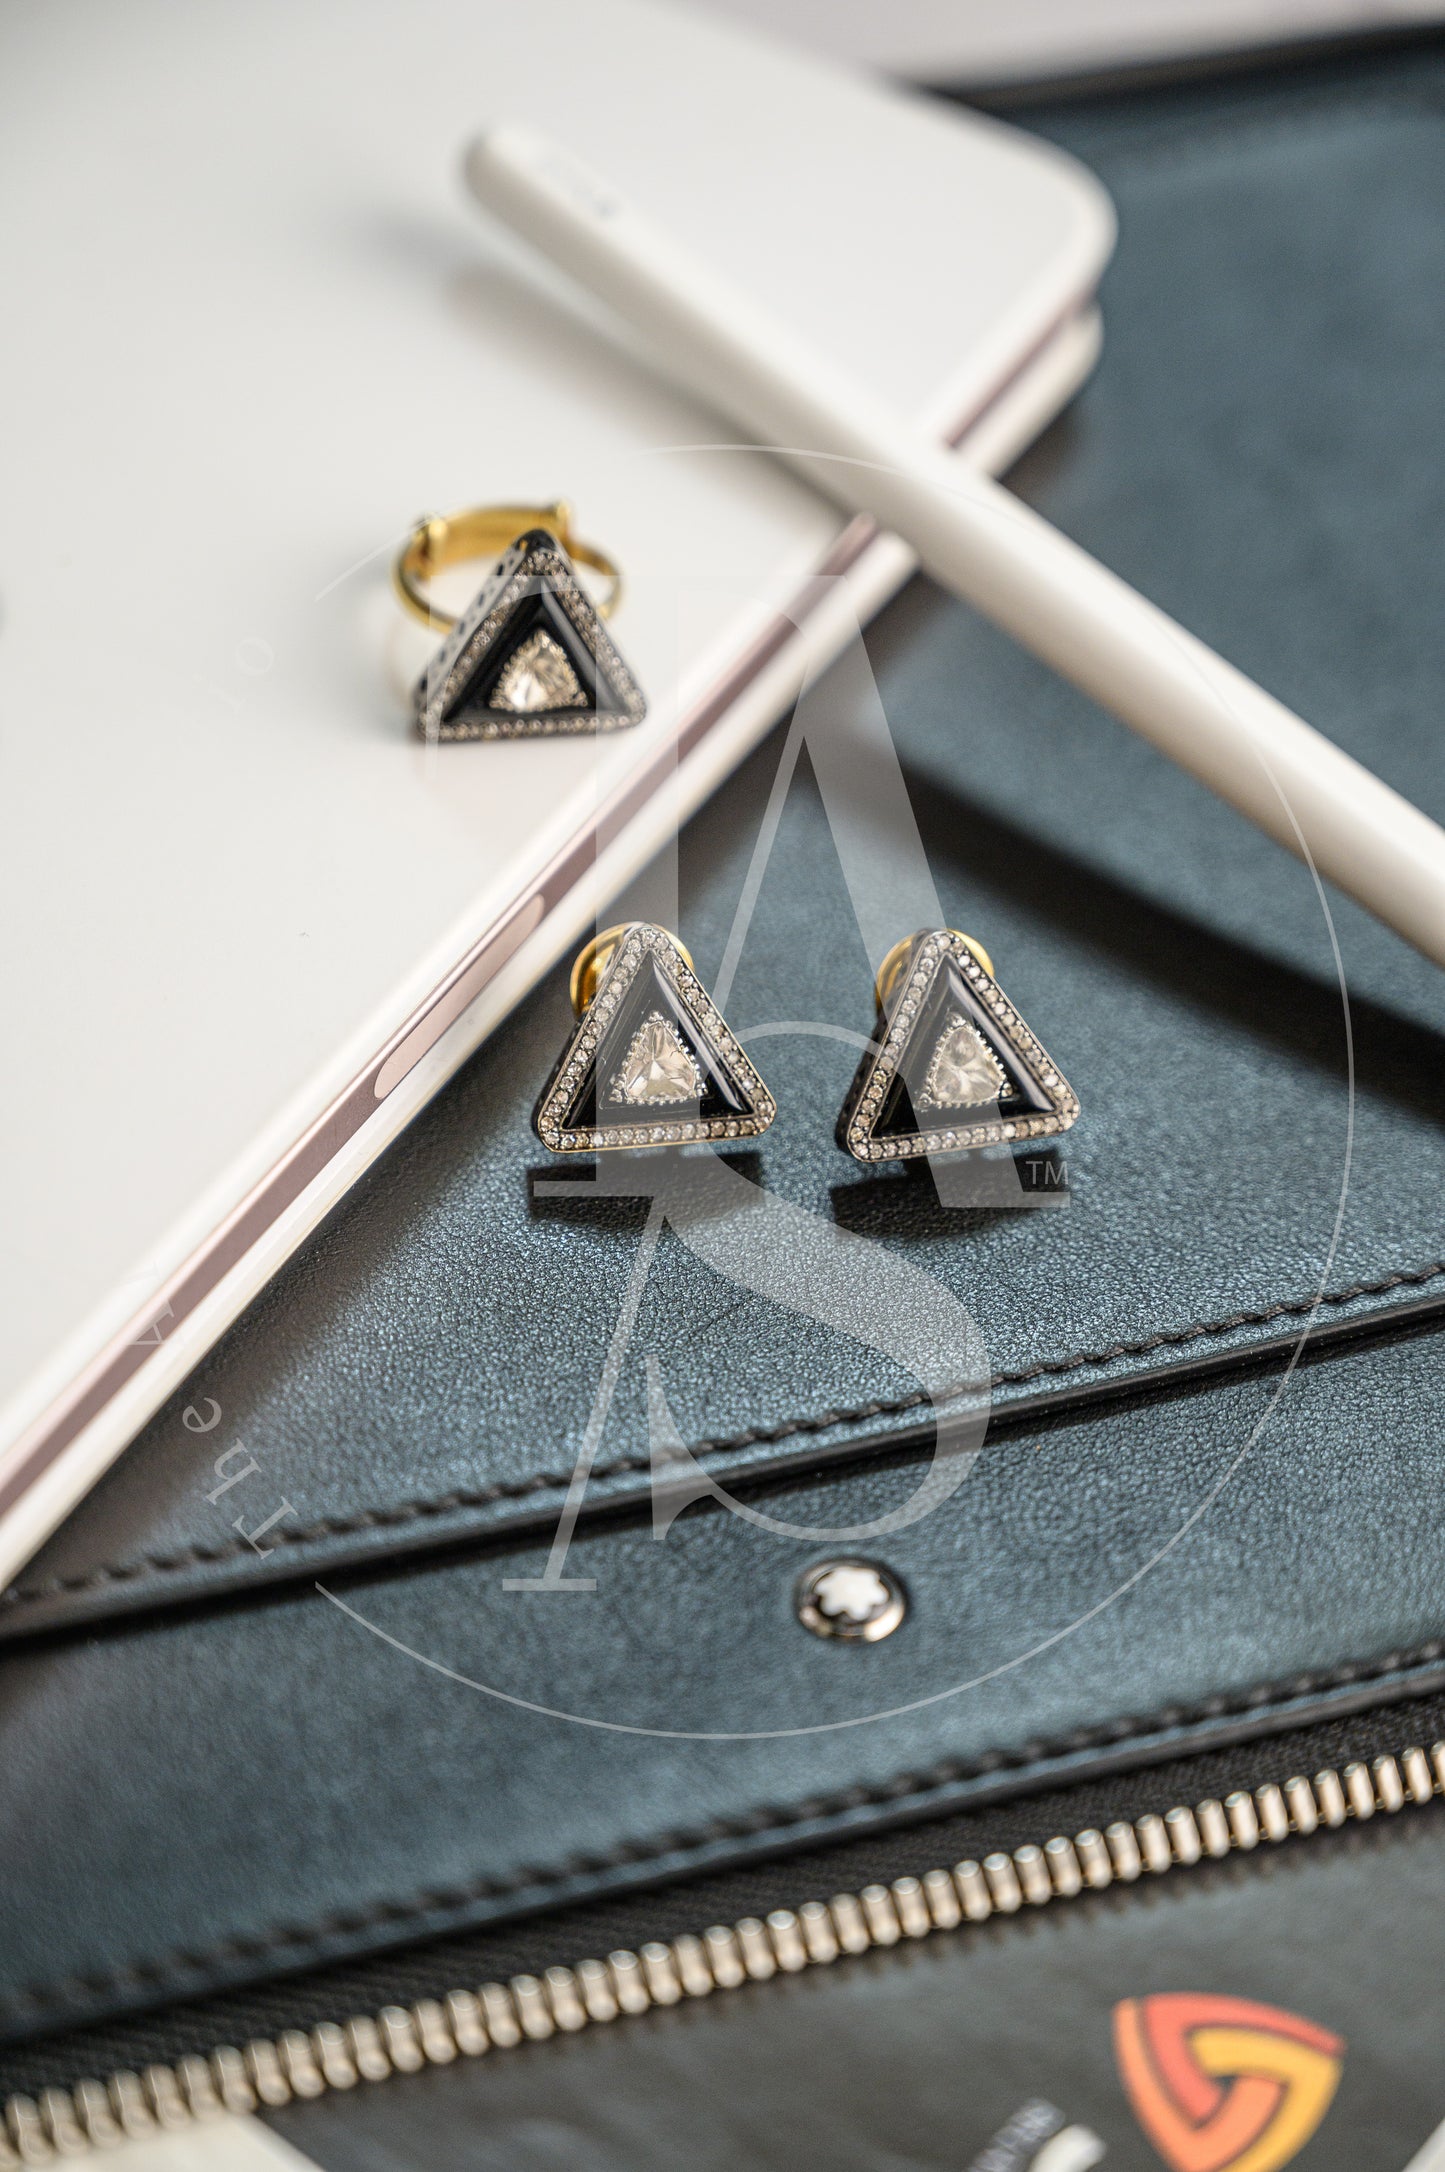 Allete Black Onyx and Uncut Diamond Triangle Earrings